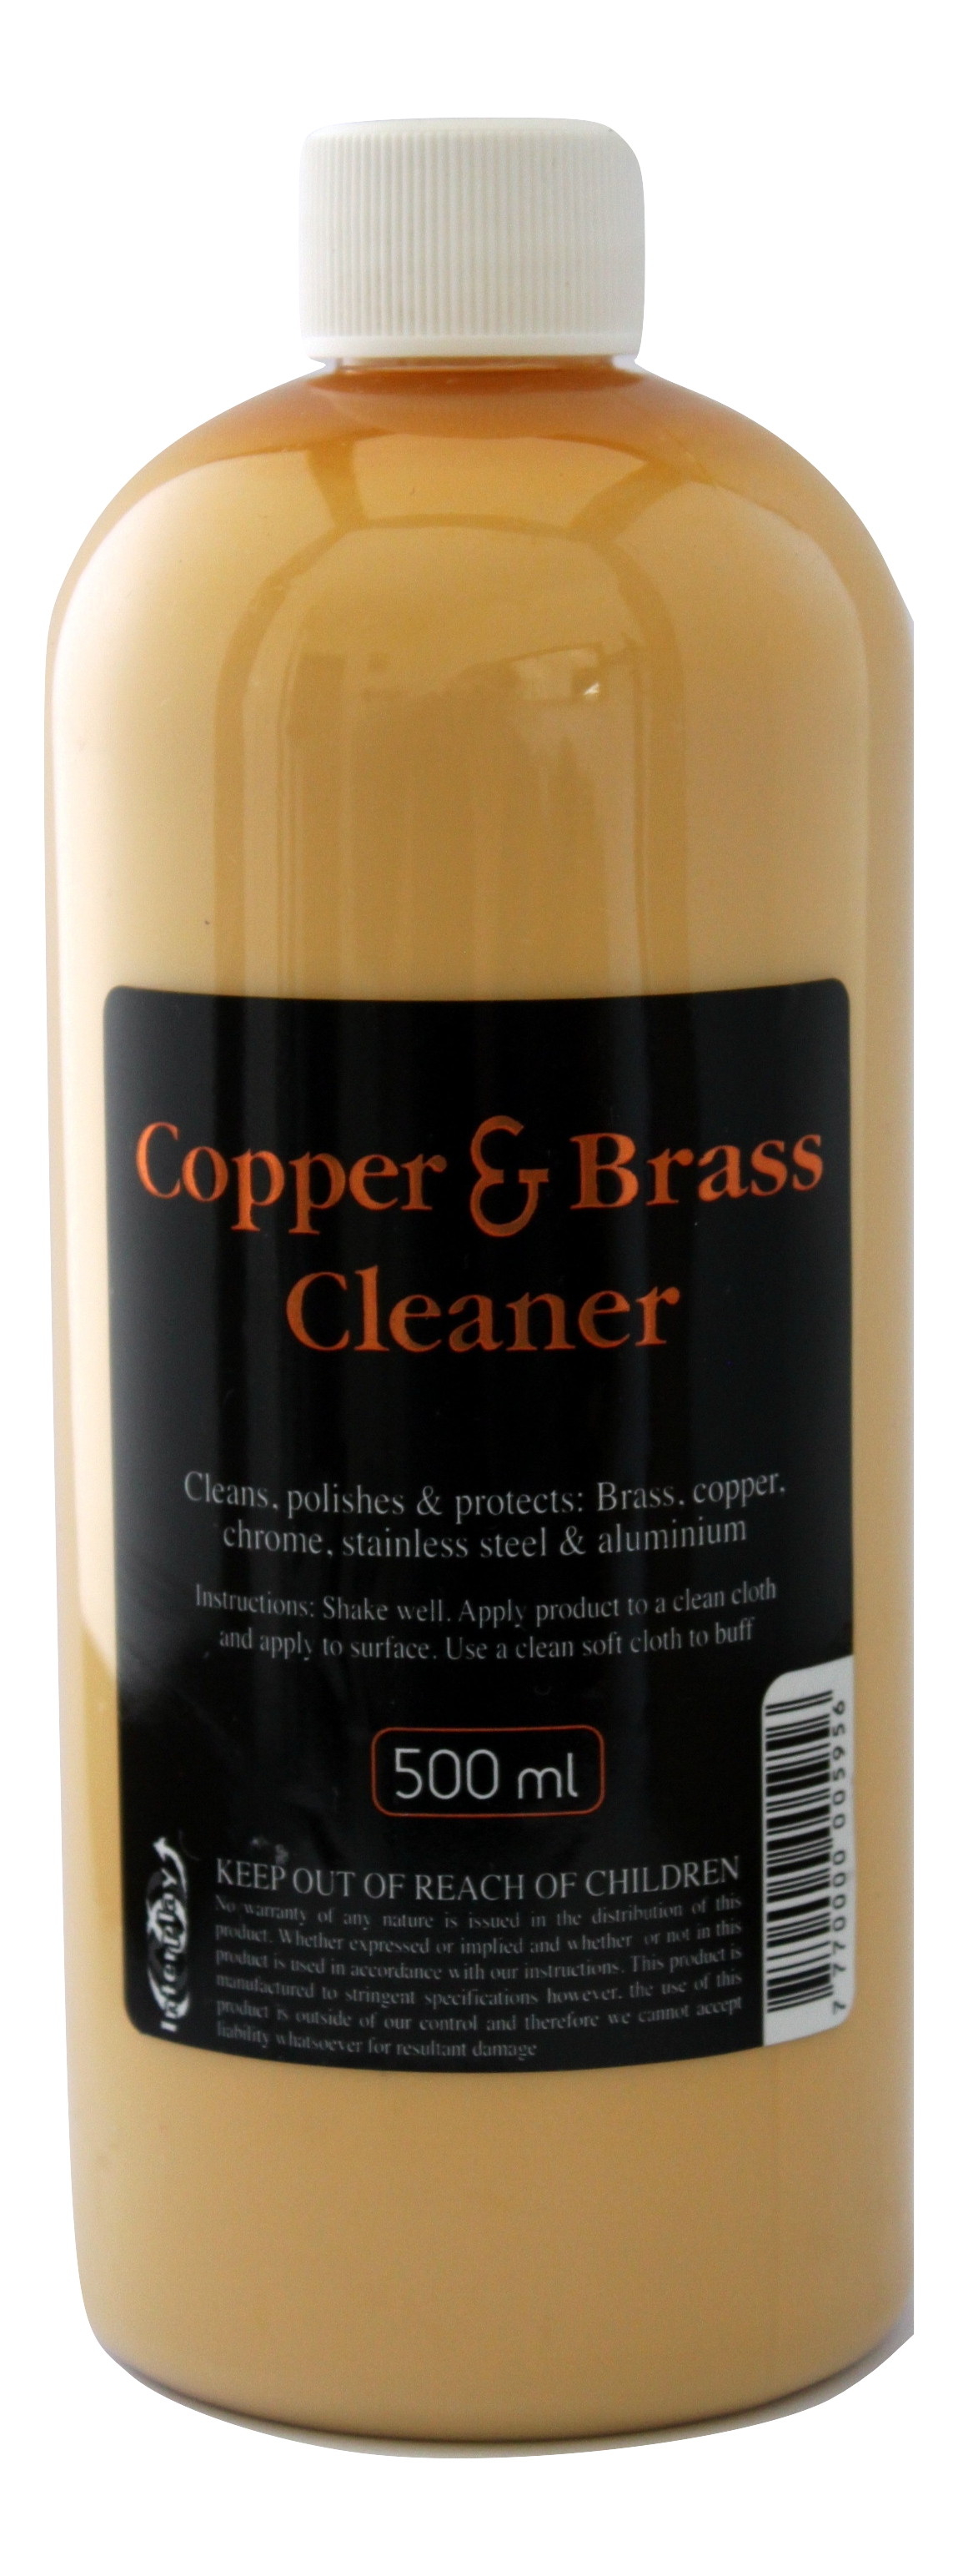 copper-&-brass-cleaner